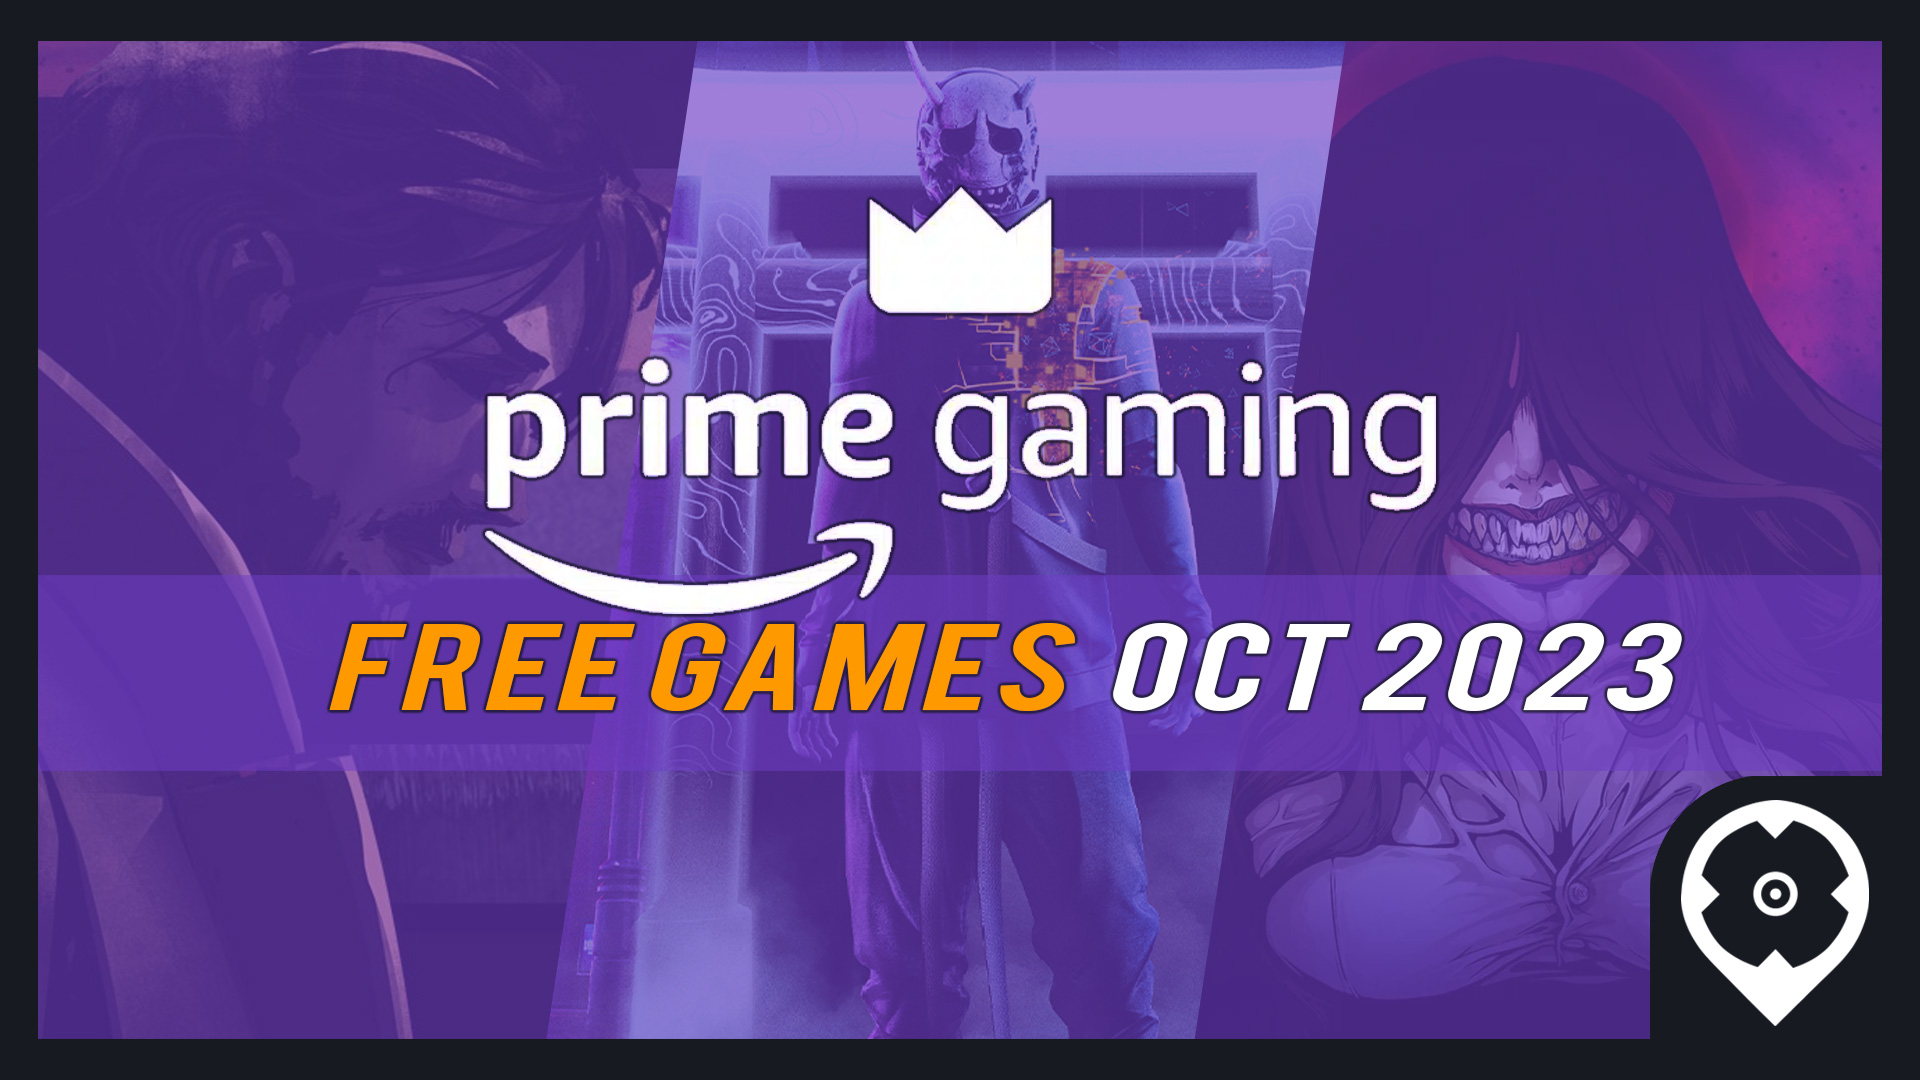 Prime Gaming October 2022 Free Games - KeenGamer